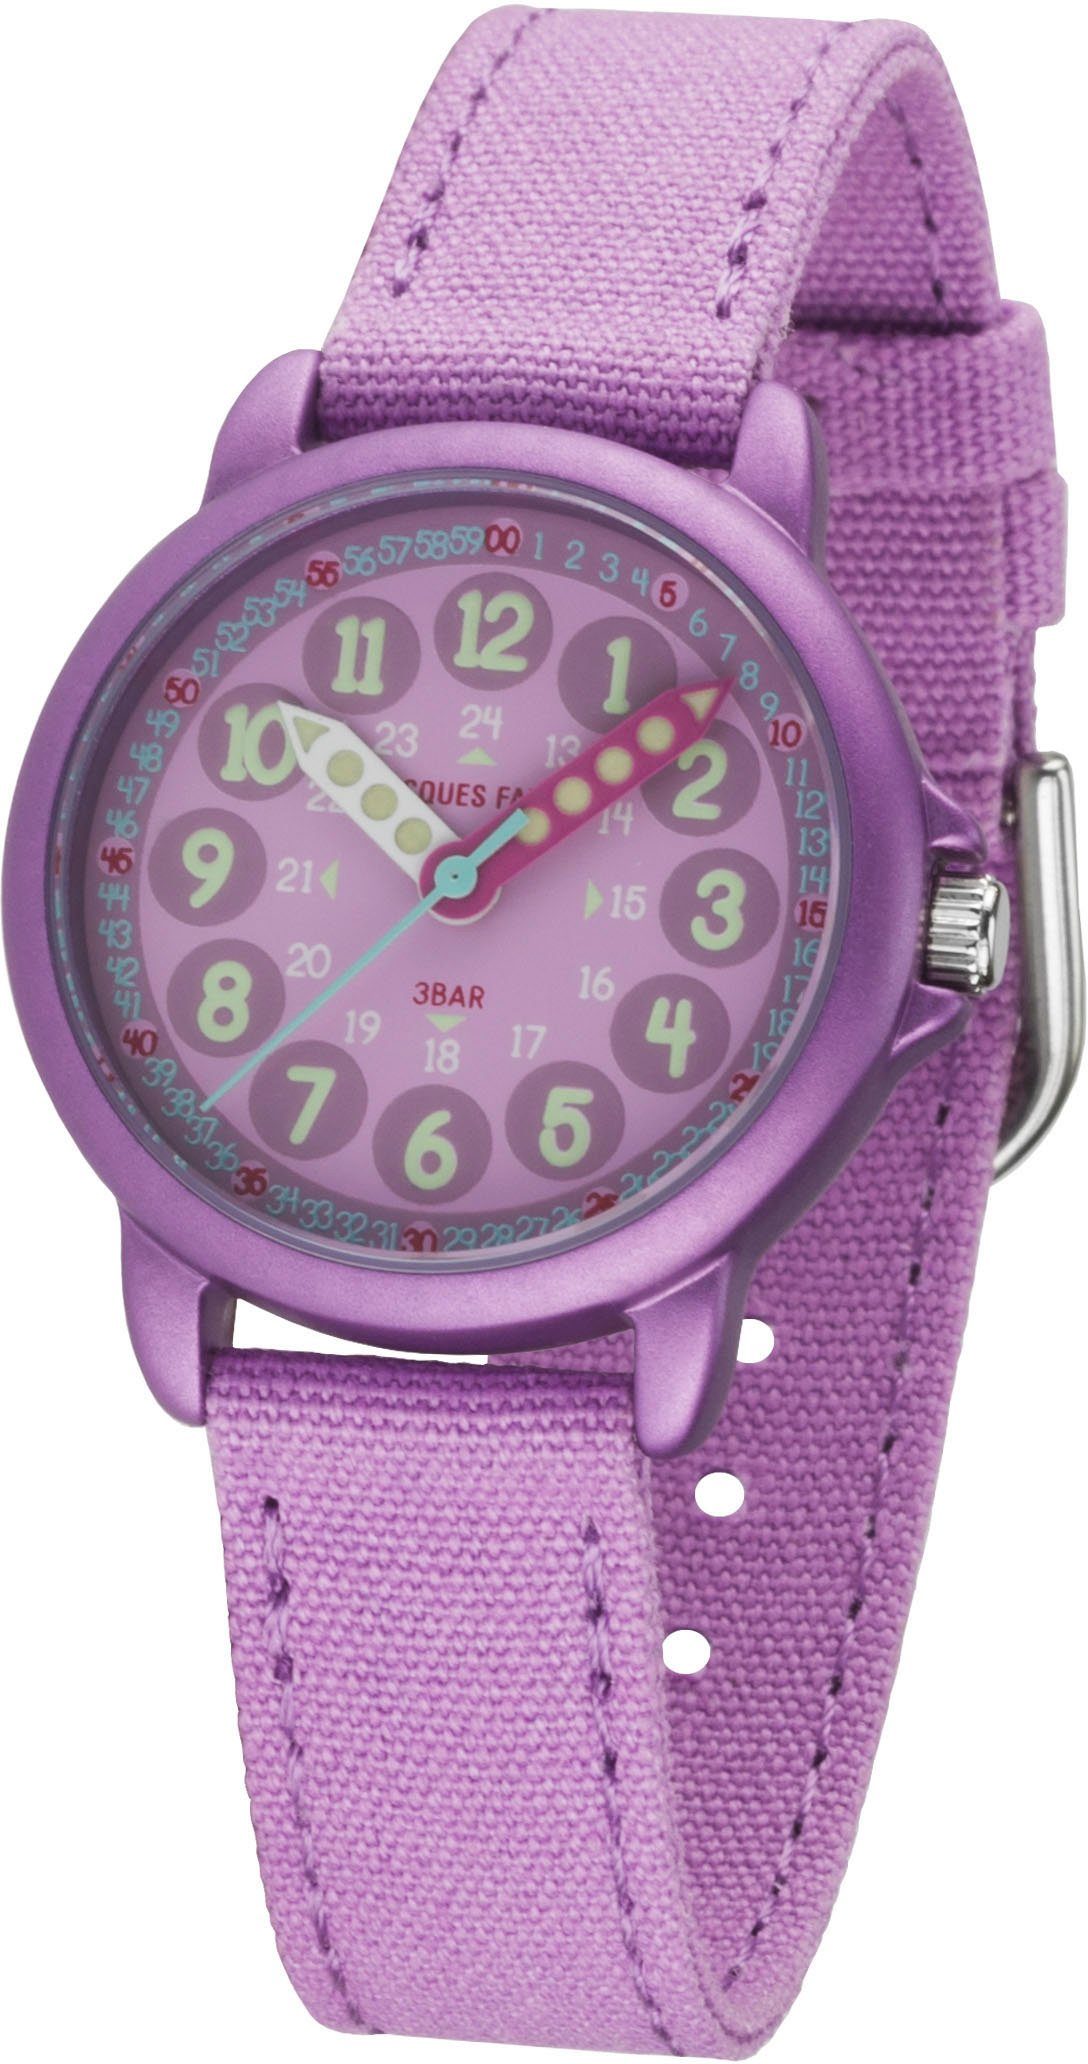 Jacques Farel Quarzuhr ORGT 1112, Armbanduhr, Kinderuhr, Mädchenuhr, ideal auch als Geschenk